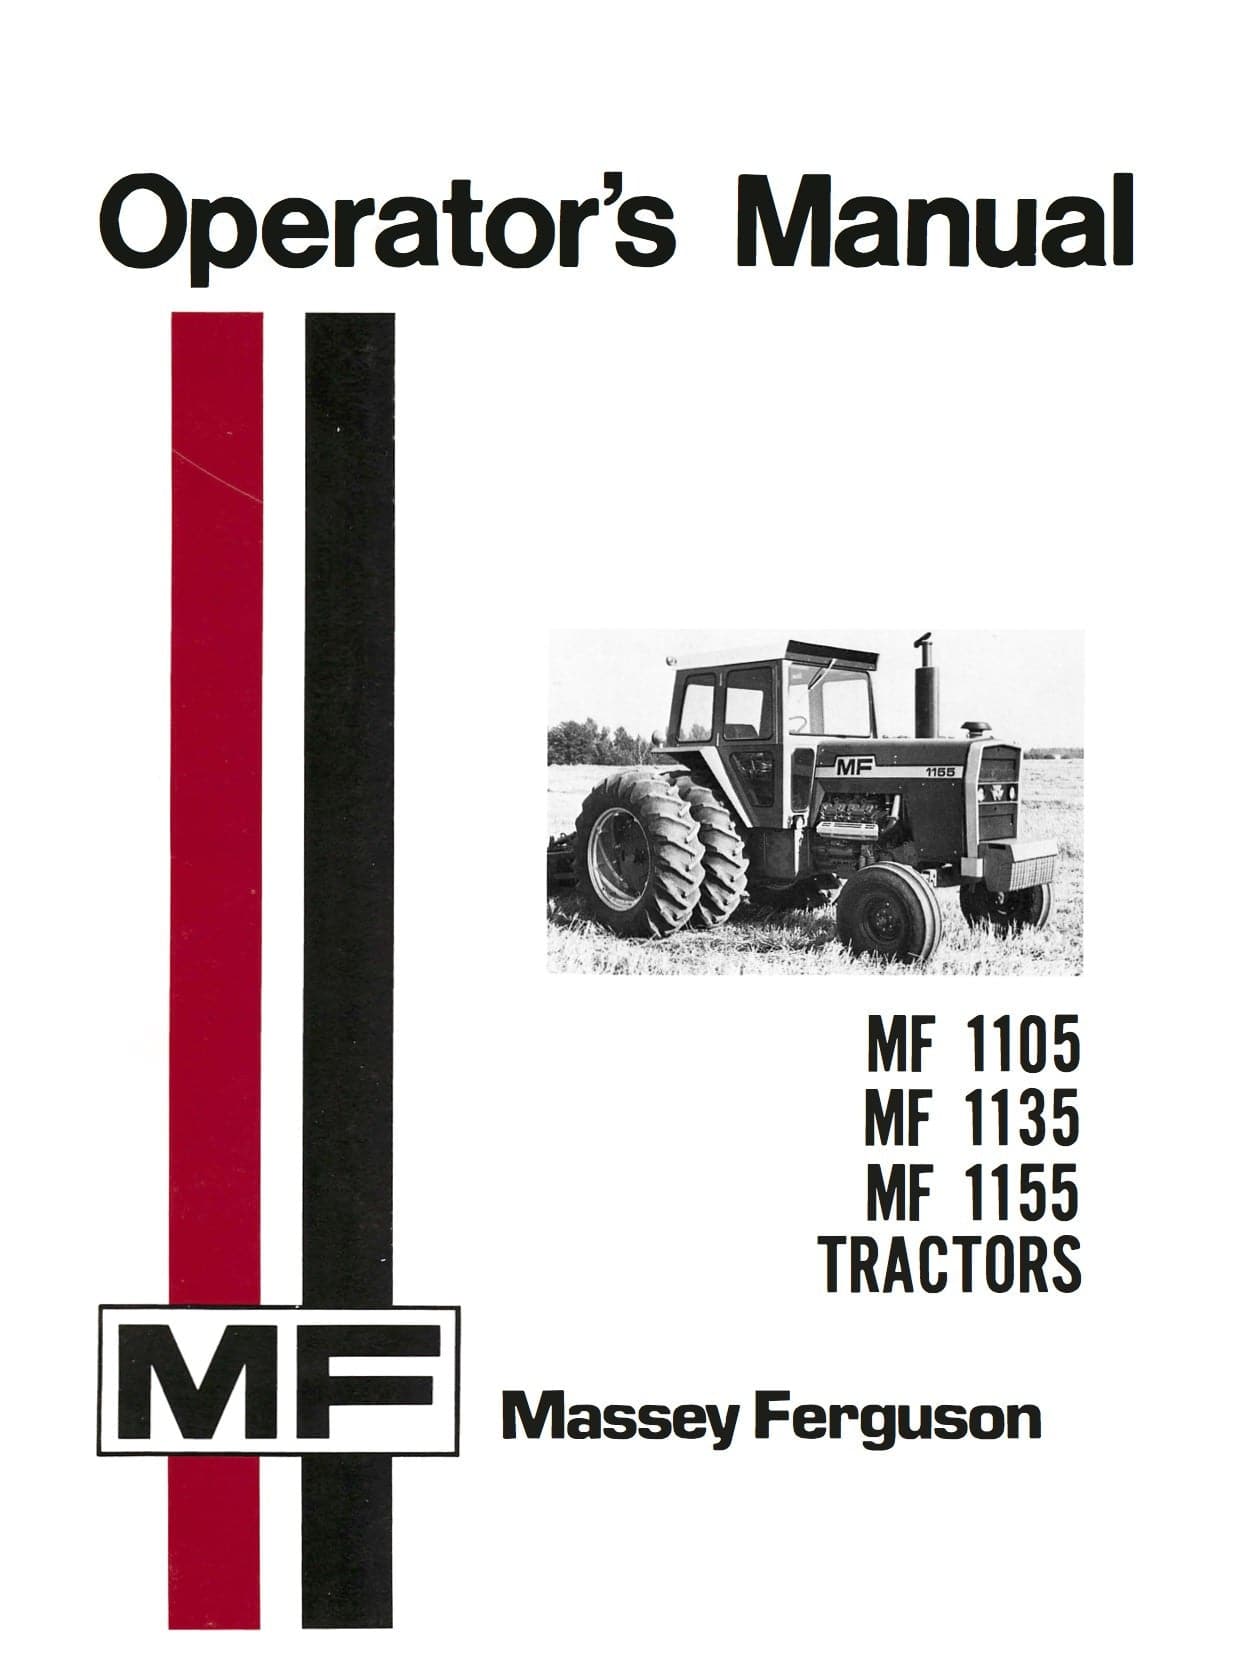 Massey Ferguson MF 1105 MF 1135 MF 1155 Tractors - Operator's Manual - Ag Manuals - A Provider of Digital Farm Manuals - 1